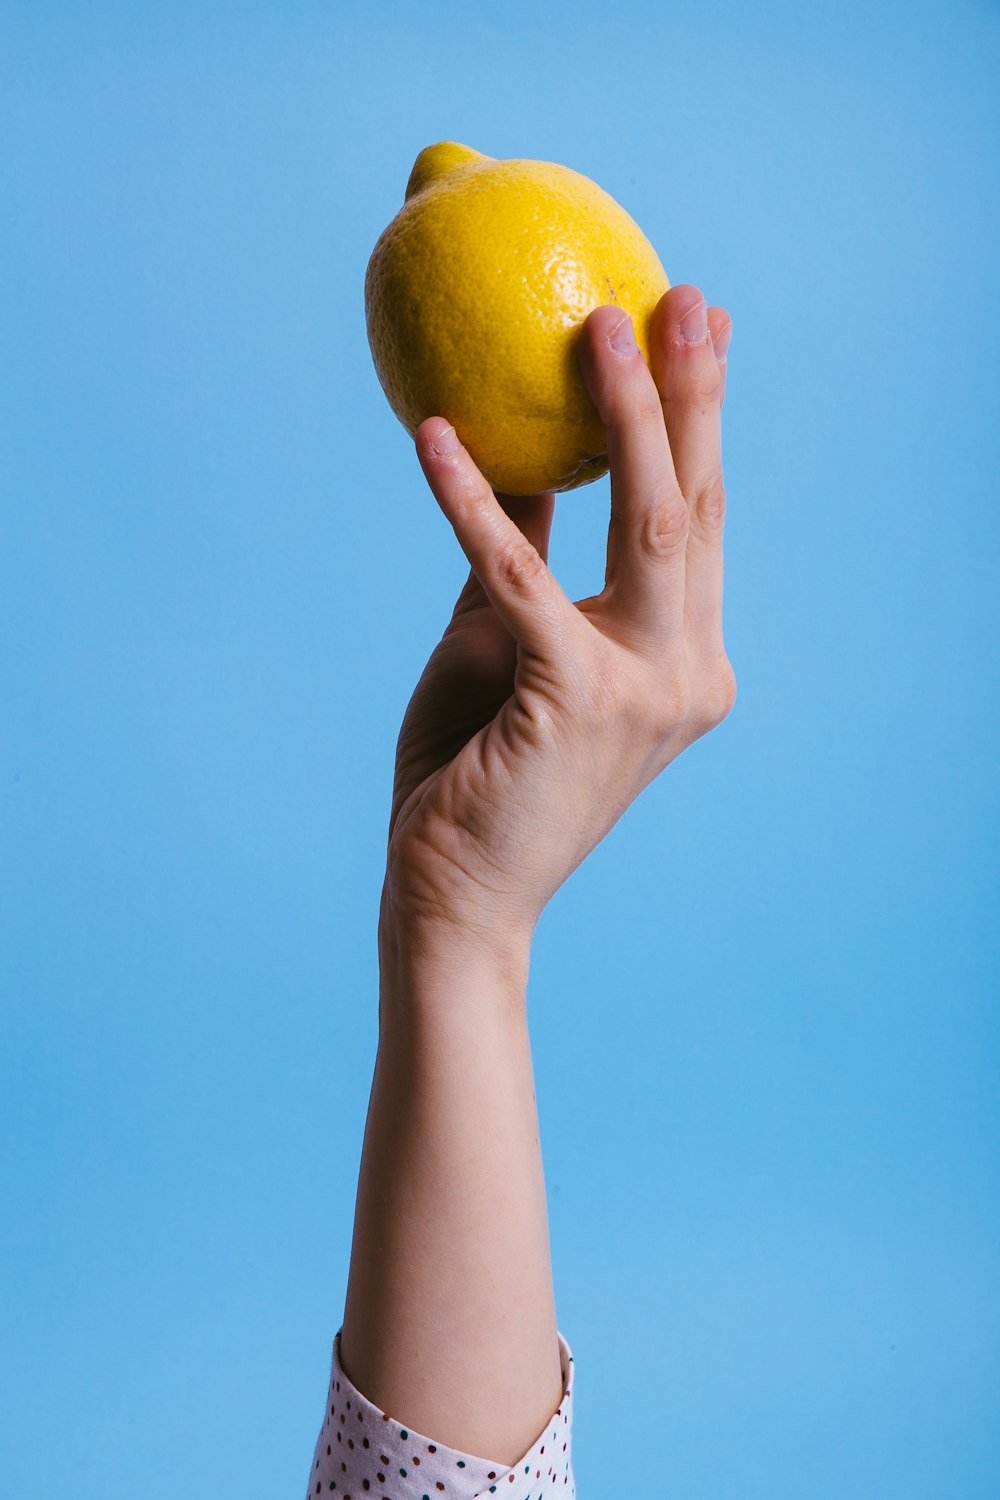 persona sosteniendo limón